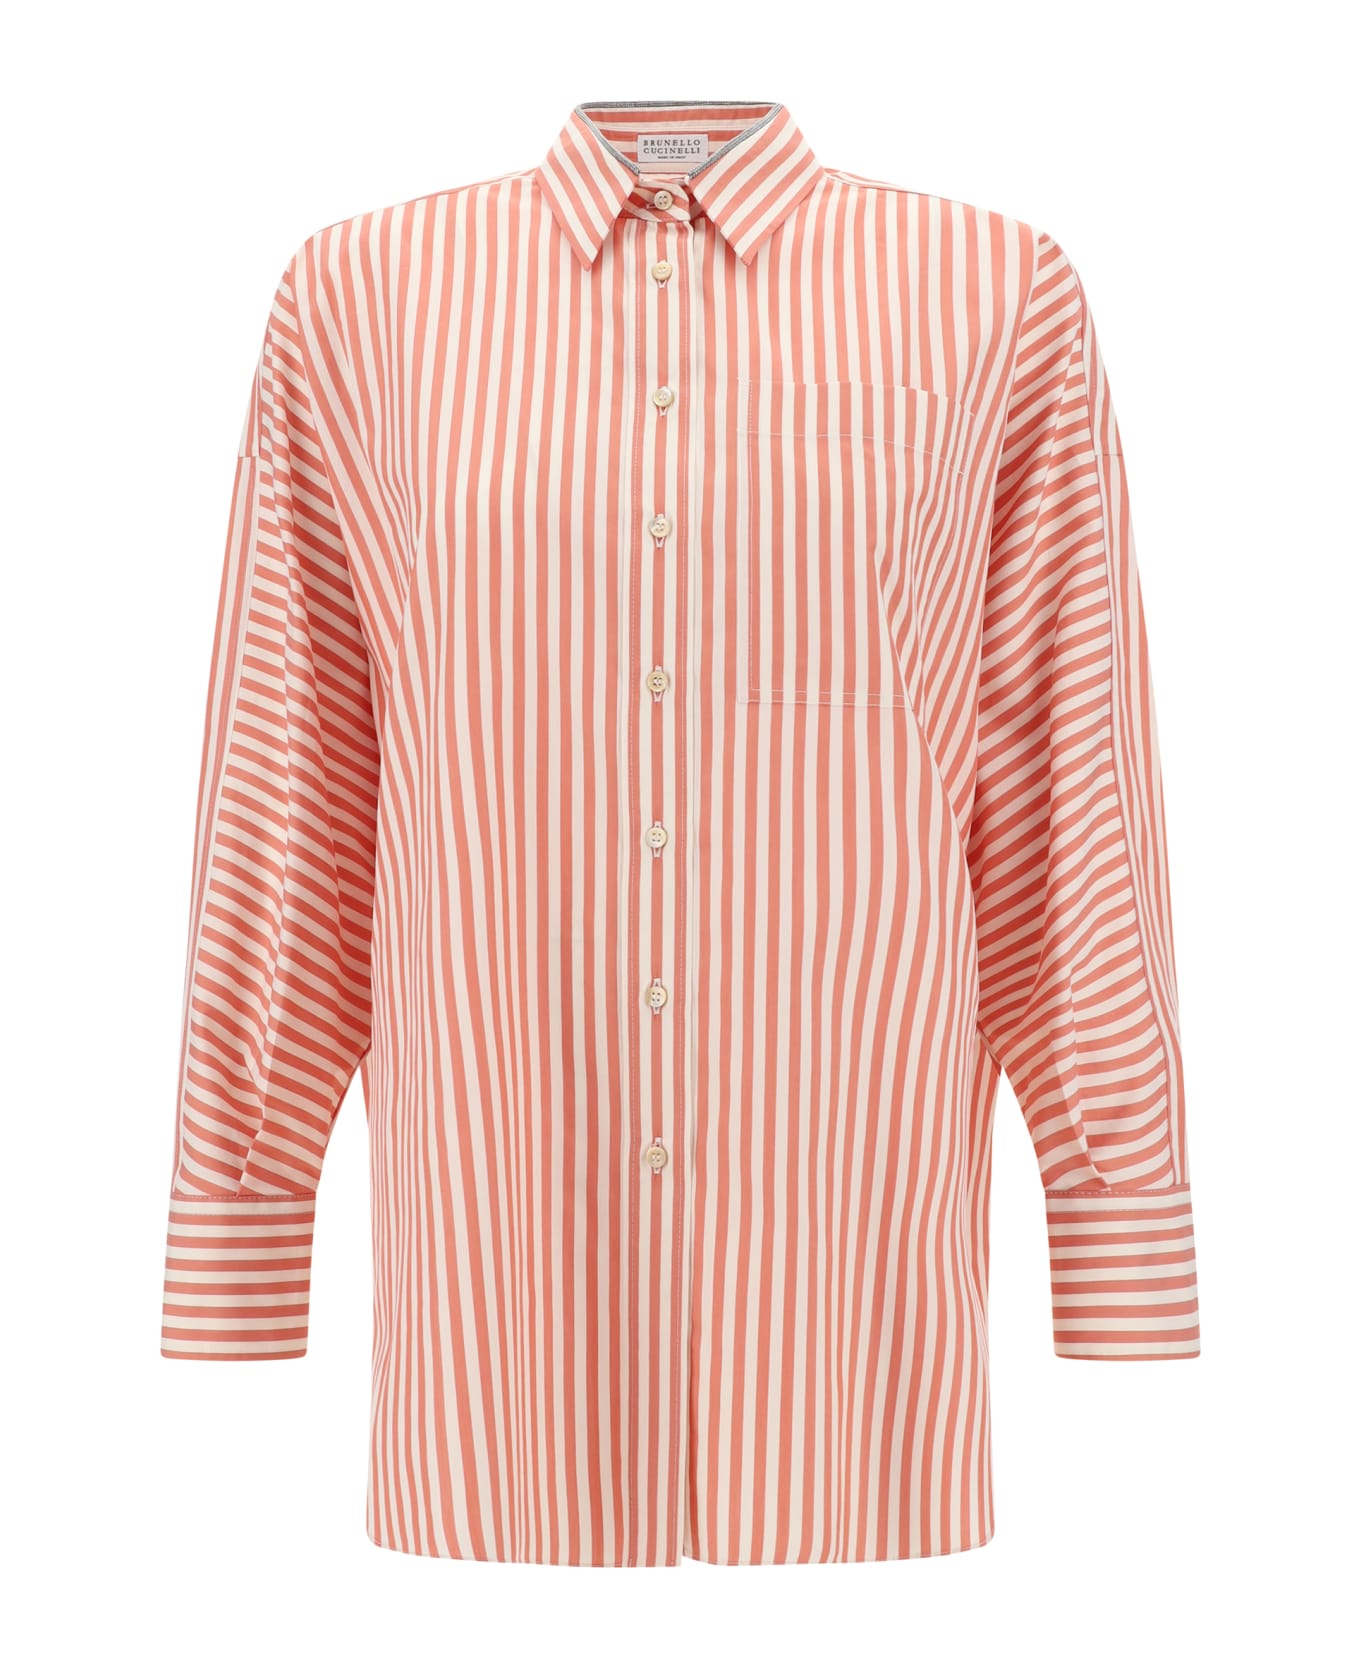 Brunello Cucinelli Shirt - Panama/arancio シャツ